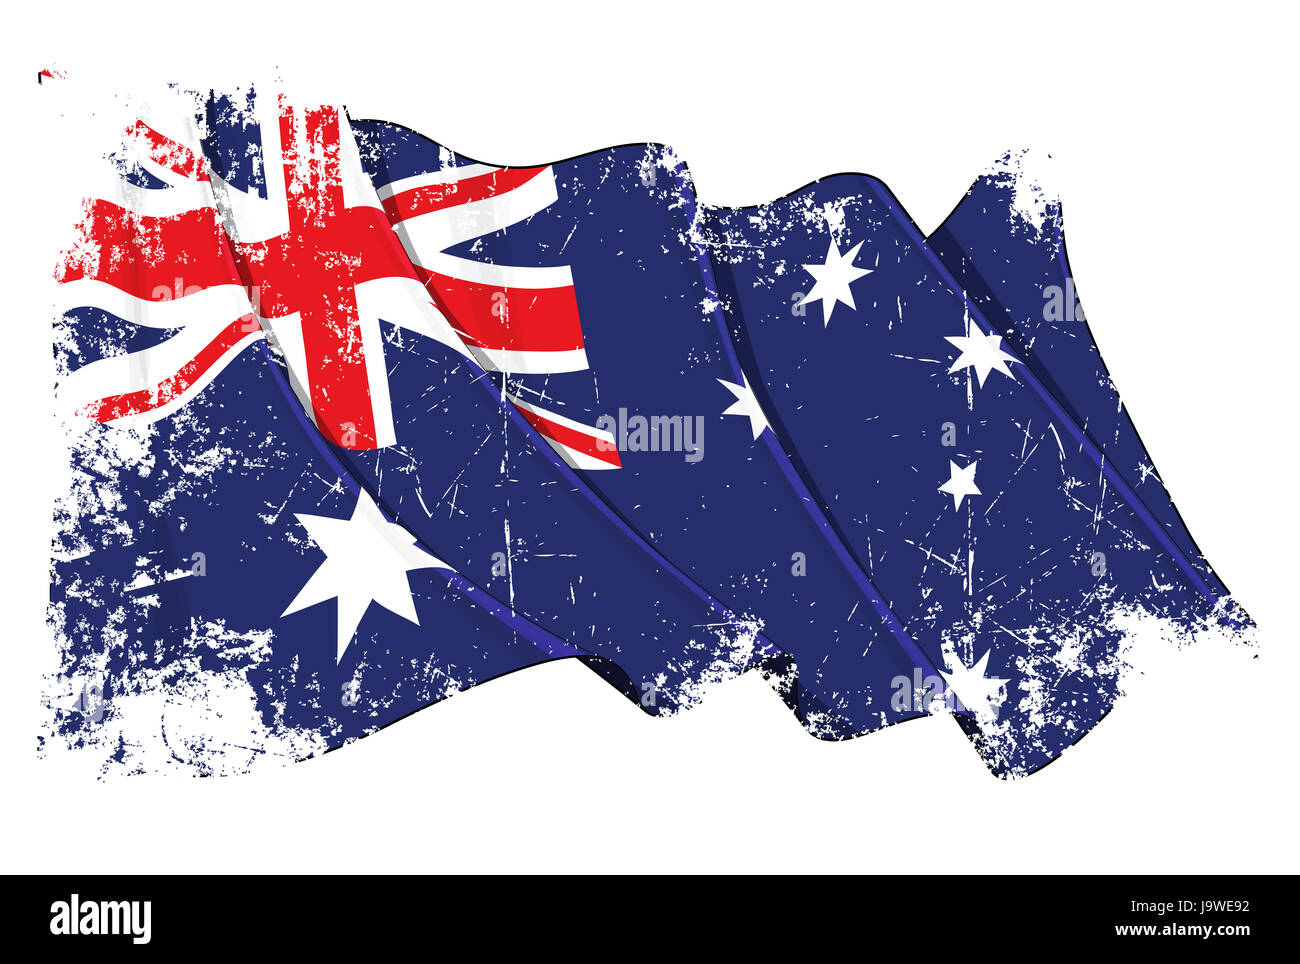 commonwealth, australia, flag, blue, commonwealth, australia, illustration, Stock Photo